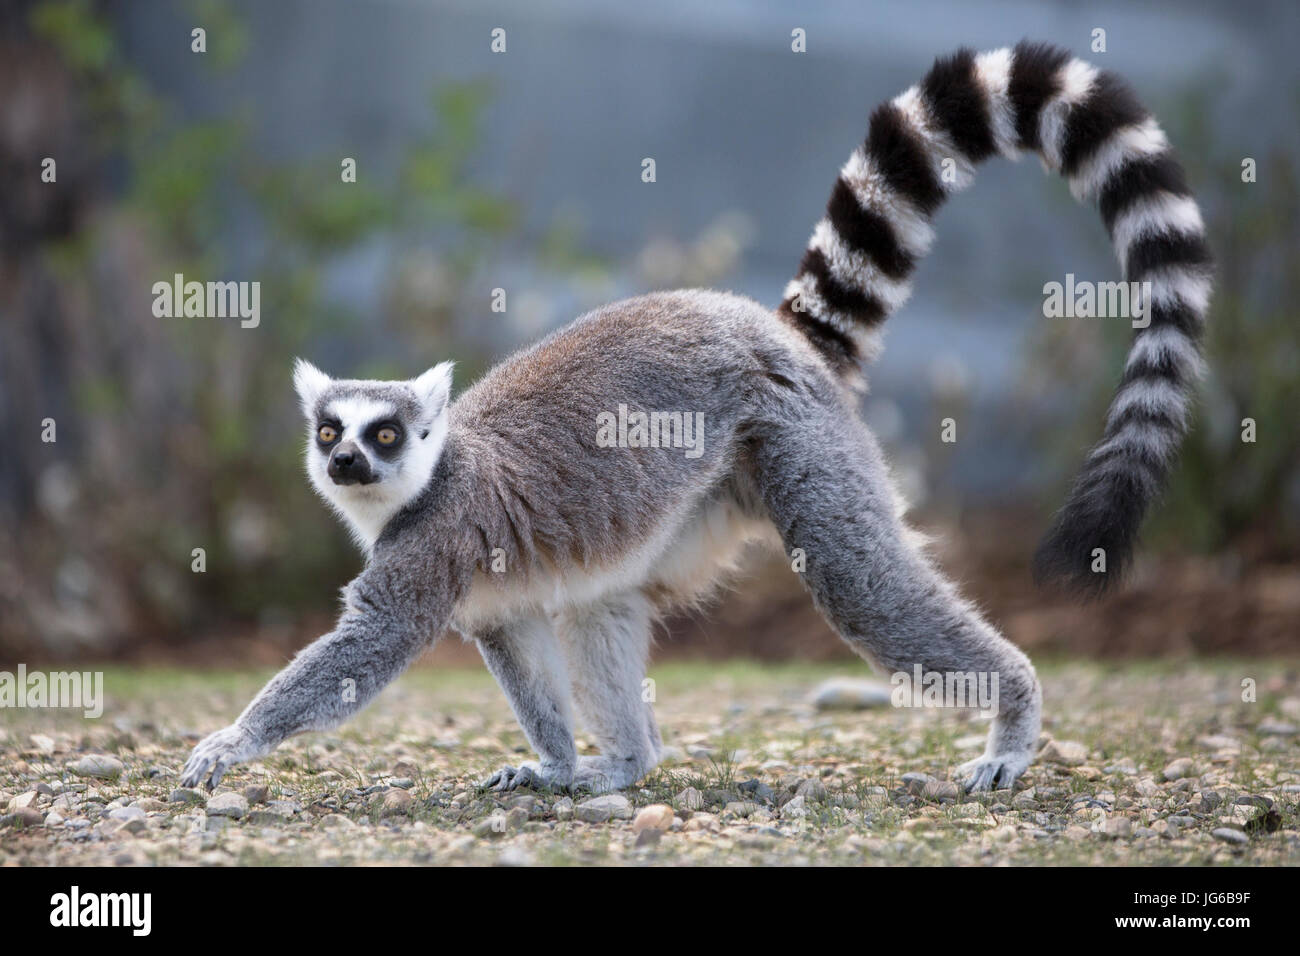 Anello-tailed lemur (Lemur catta) Passeggiate Foto Stock